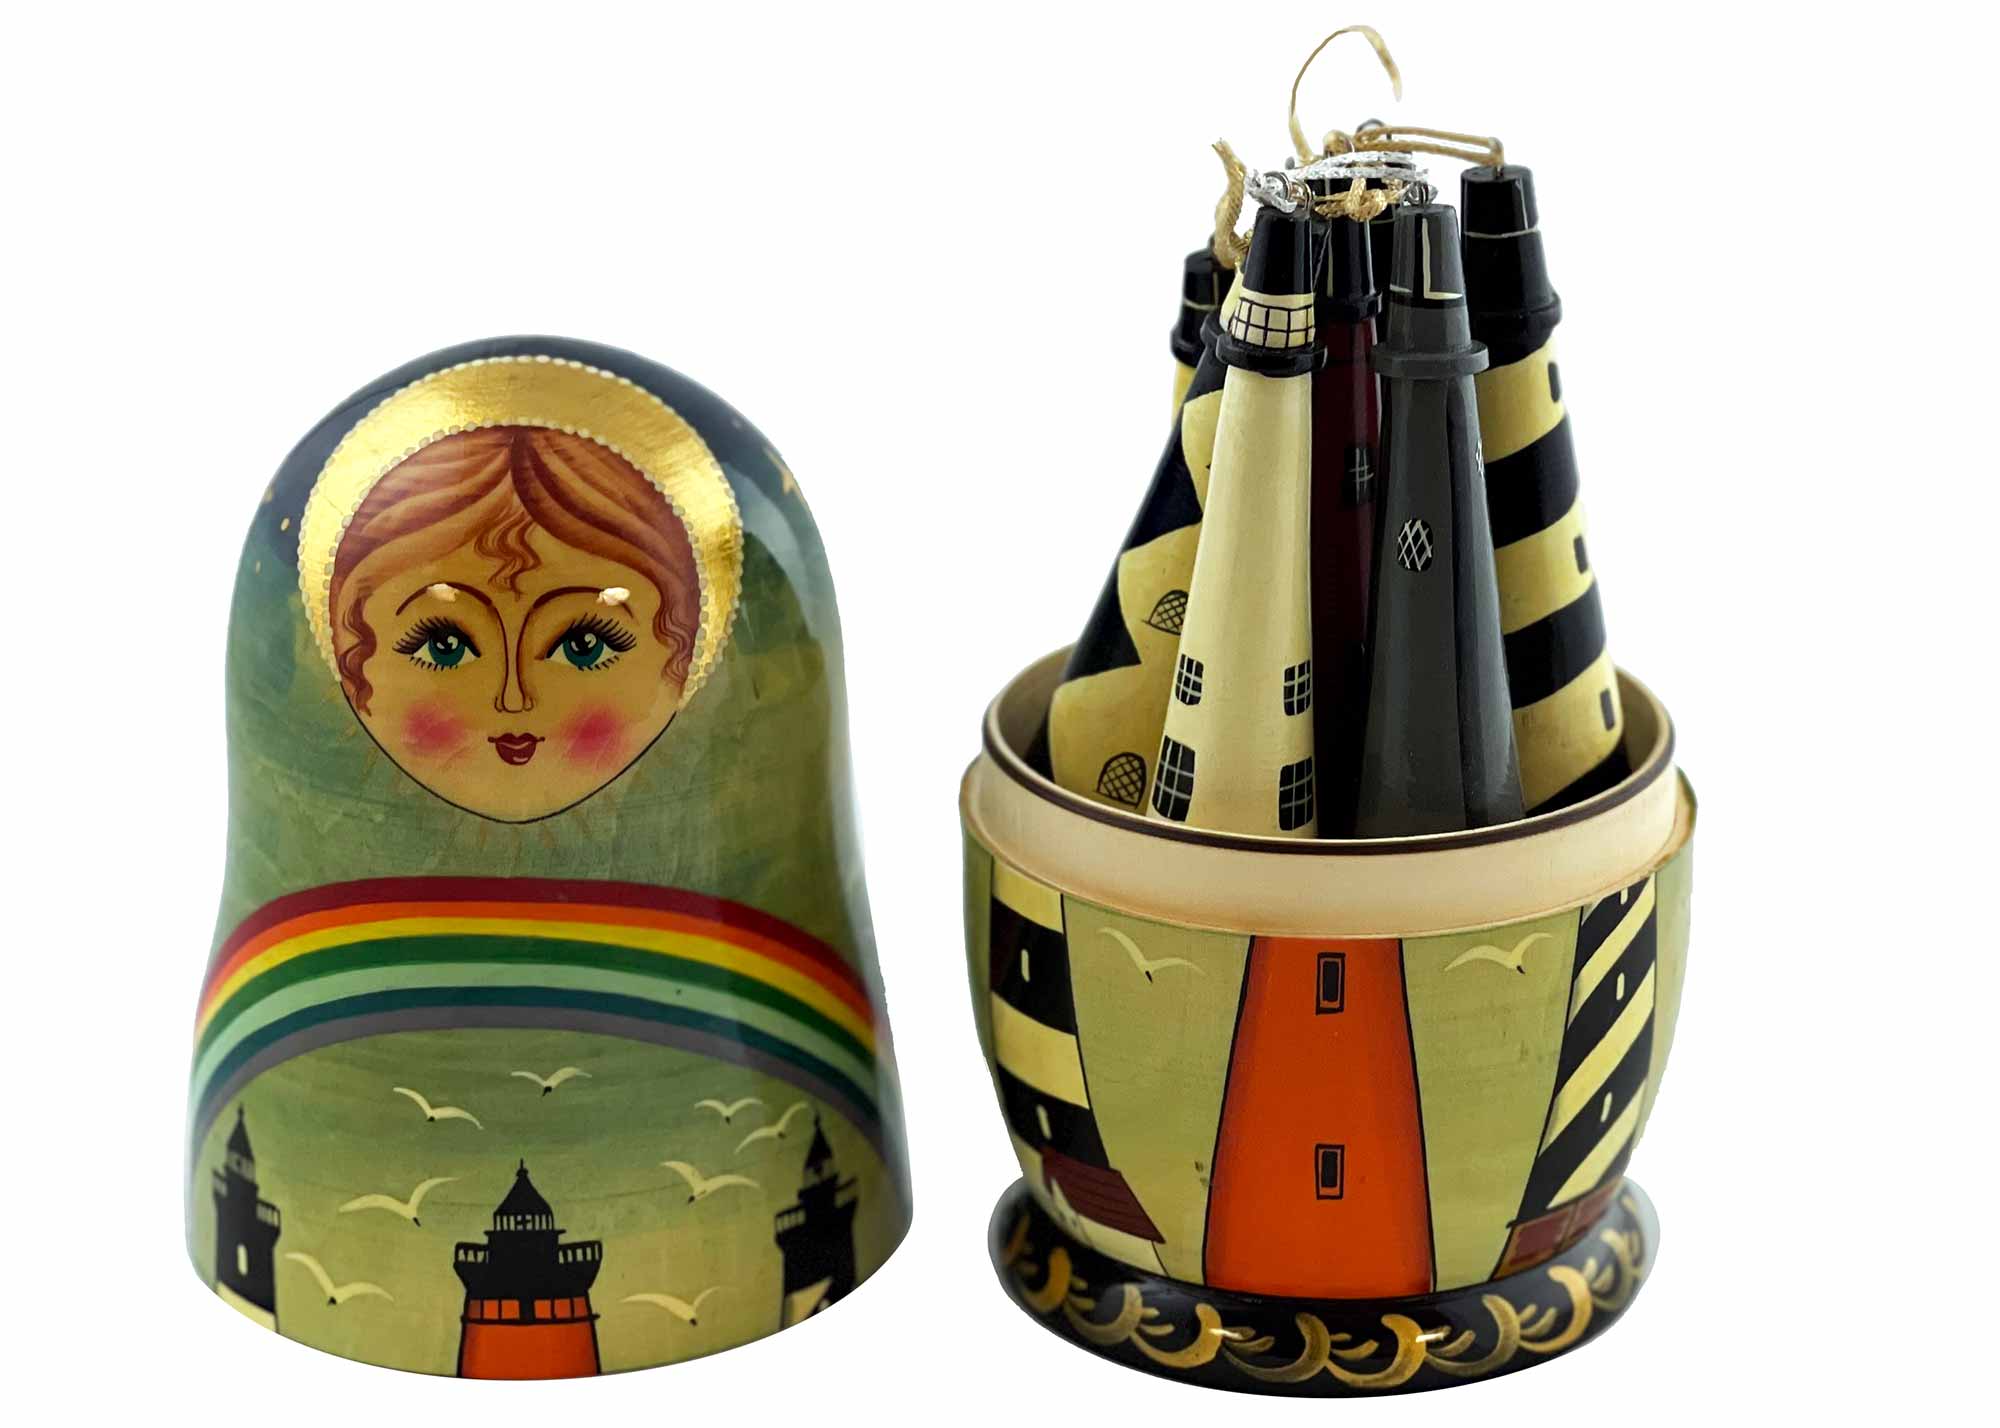 Buy Vintage Lighthouses of the Outer Banks Surprise Doll 8" at GoldenCockerel.com